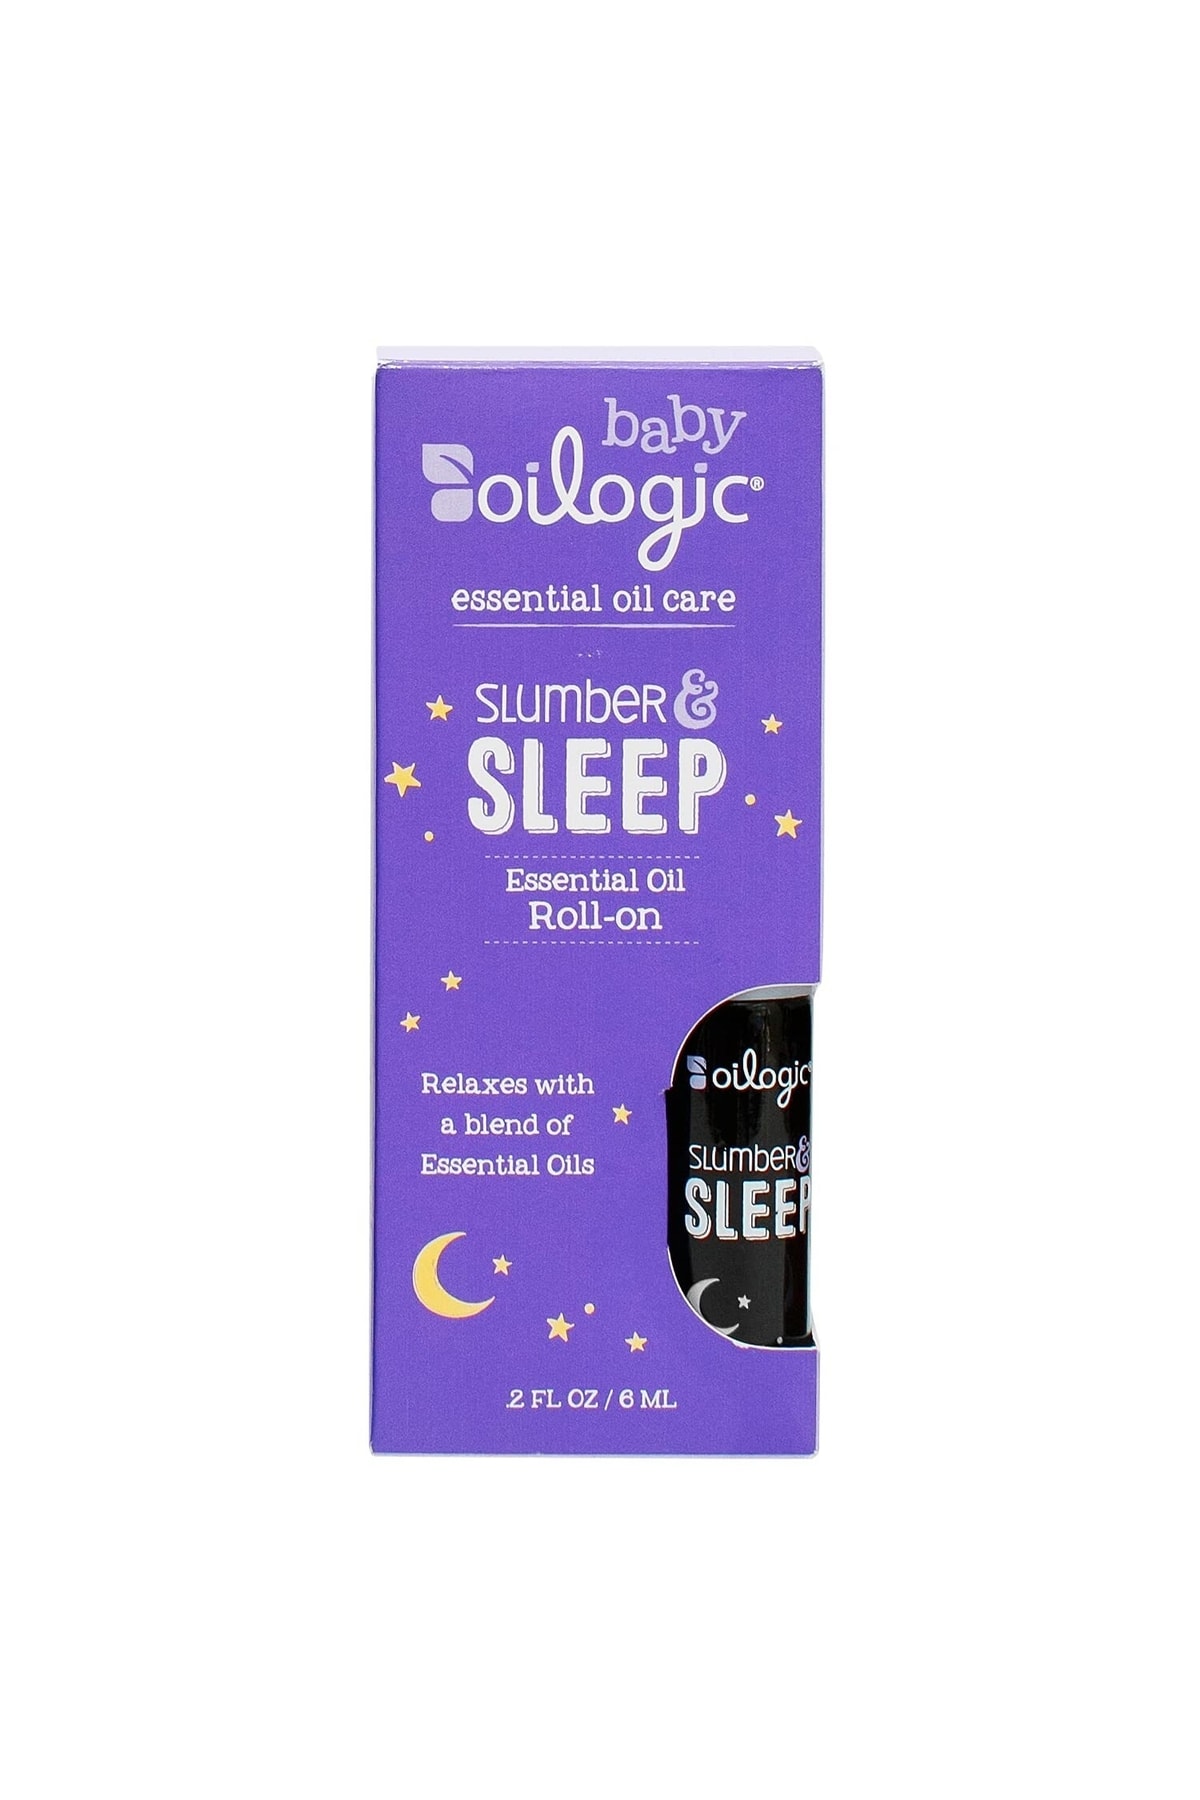 baby oilgoic Slumber Sleep Essential Oil Lavendar Blend Roll-on